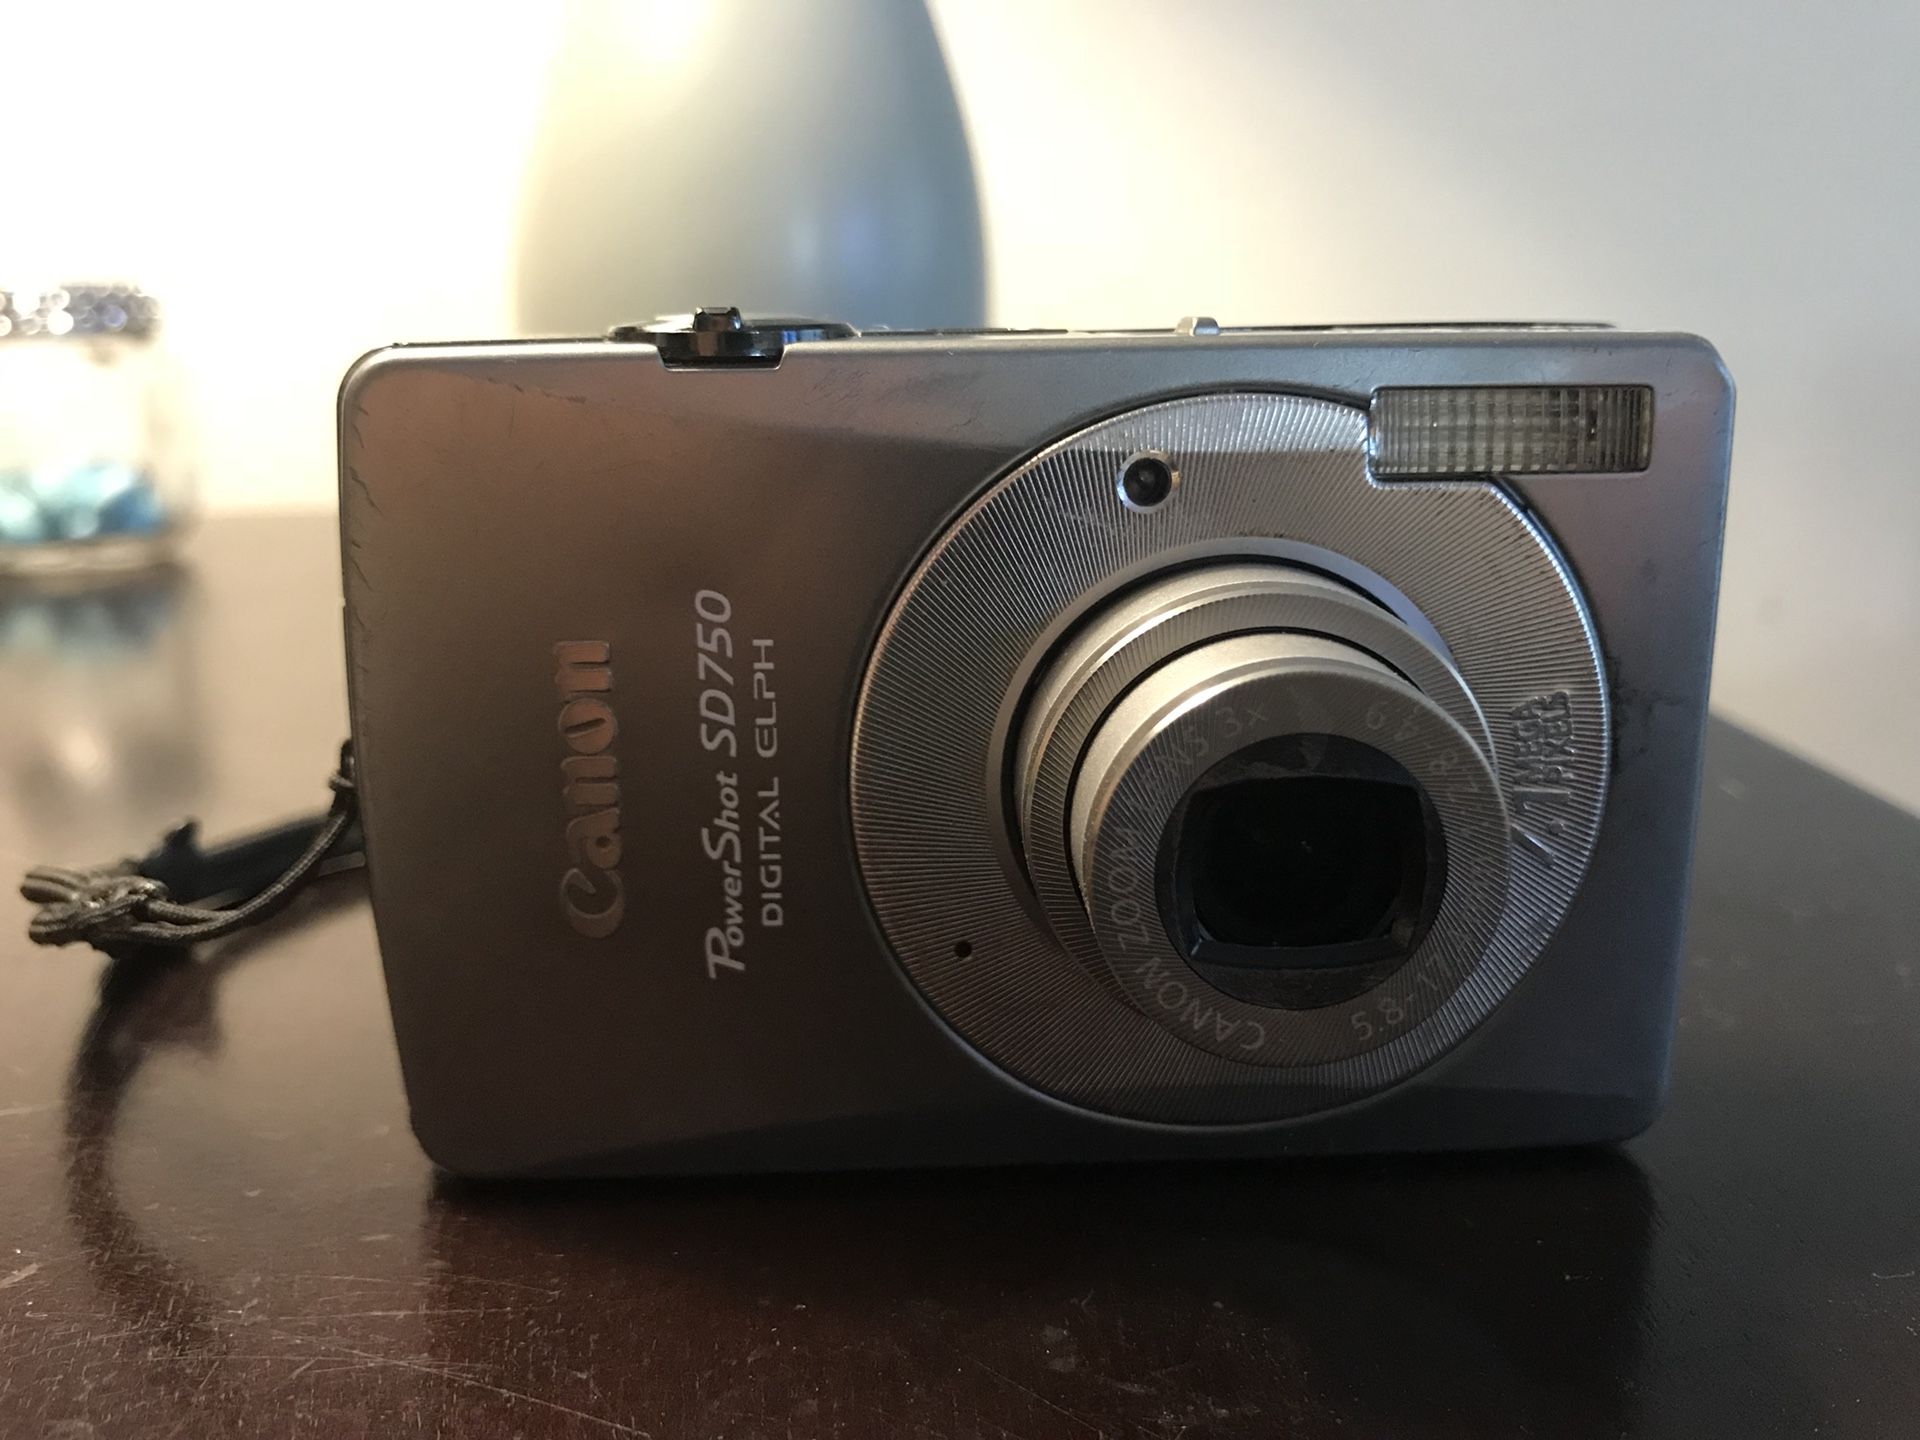 Canon PowerShot SD750 Digital Camera